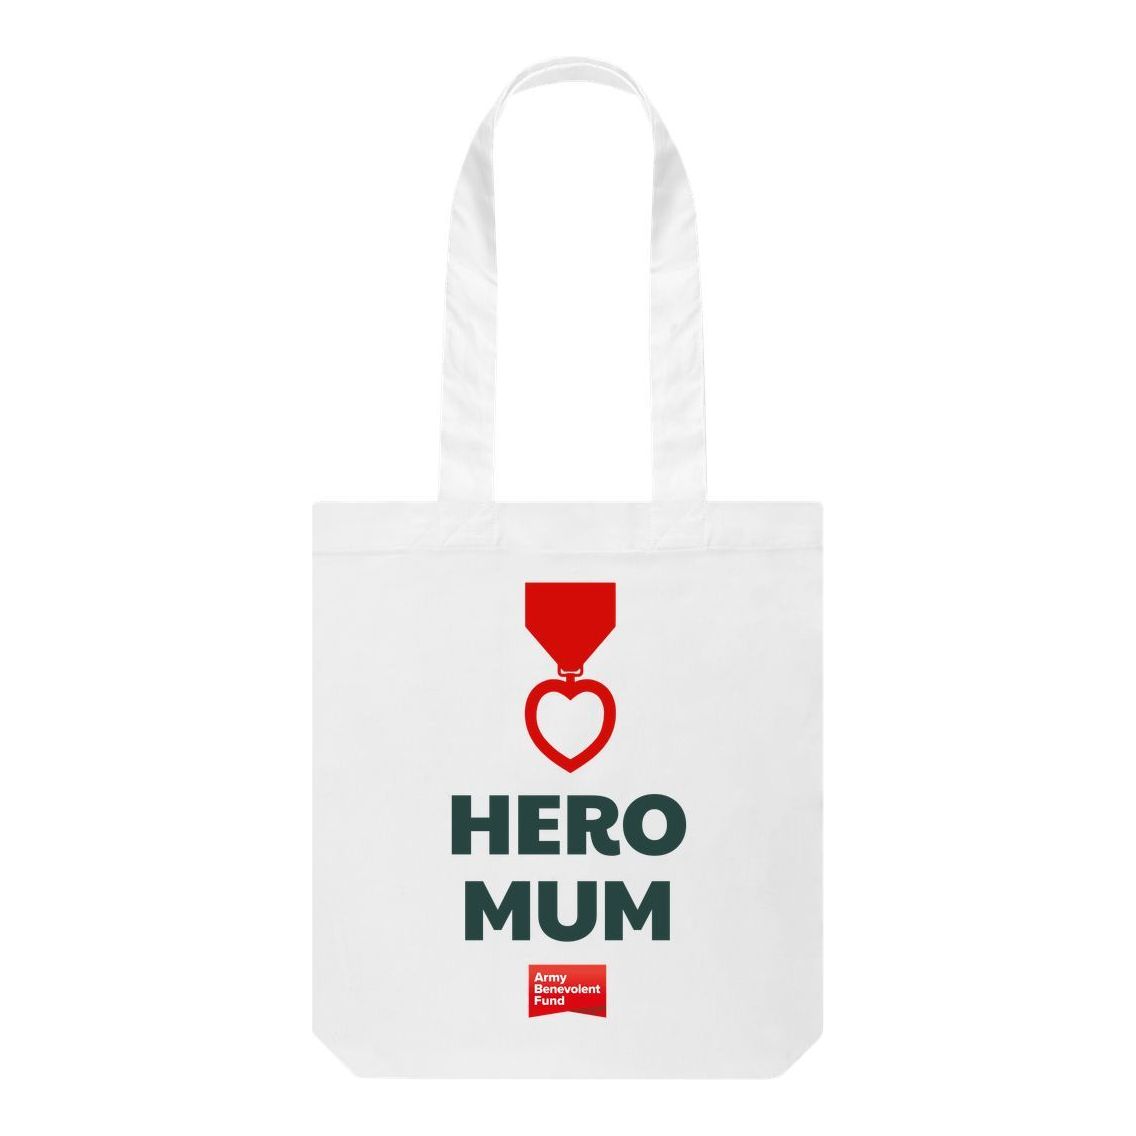 Hero Mum tote bag - Army Benevolent Fund